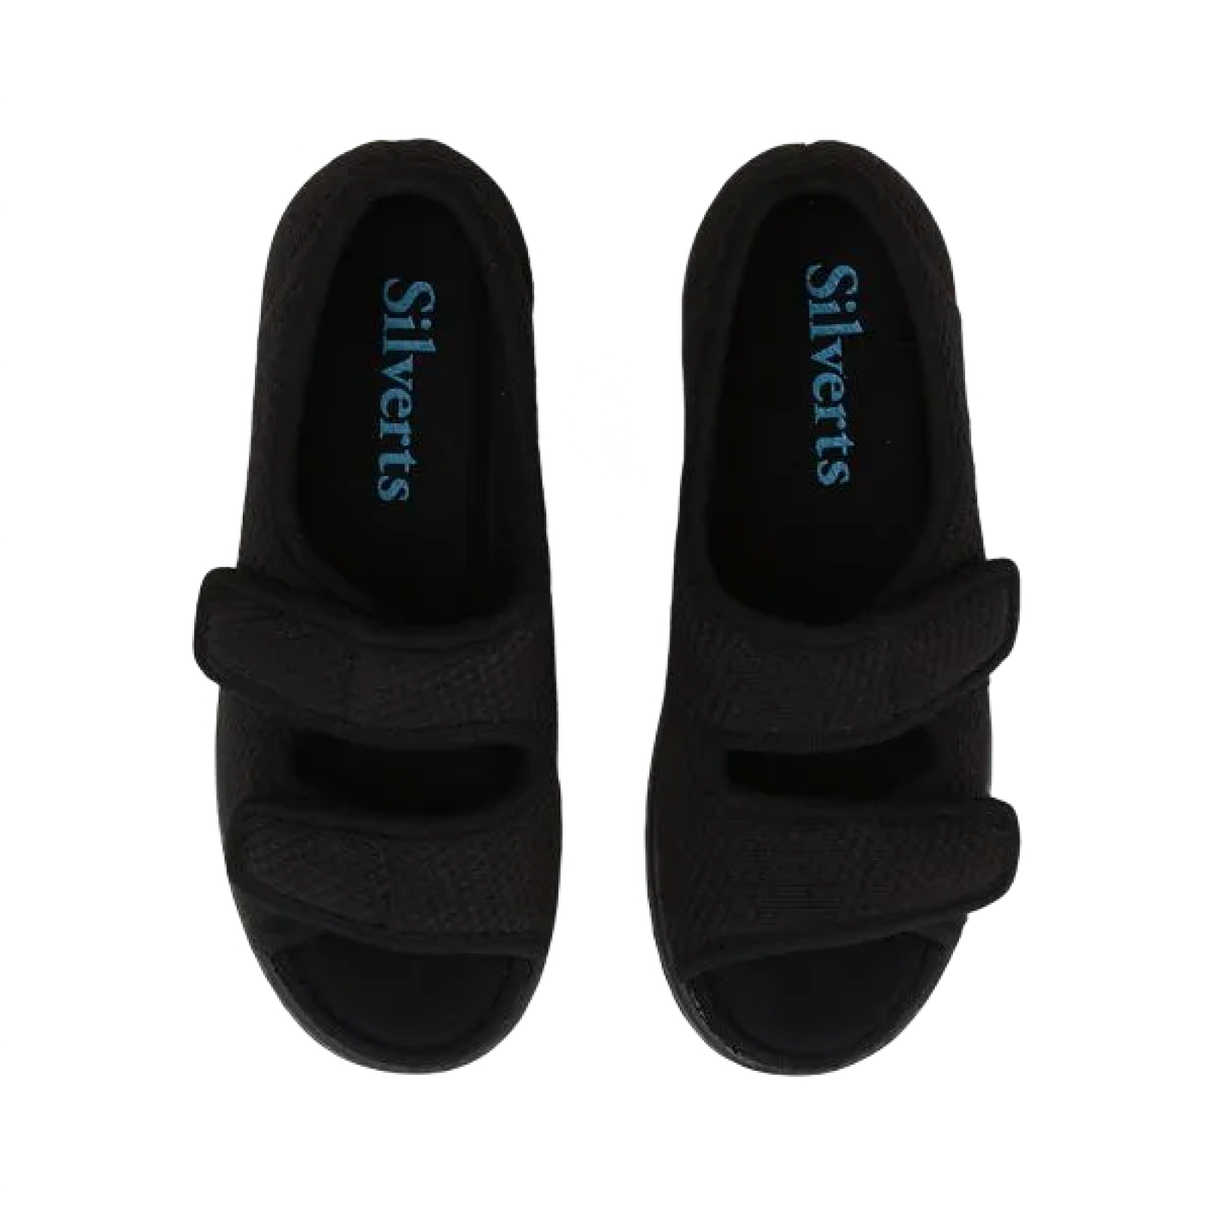 Top down view of black velvet open toed sandals